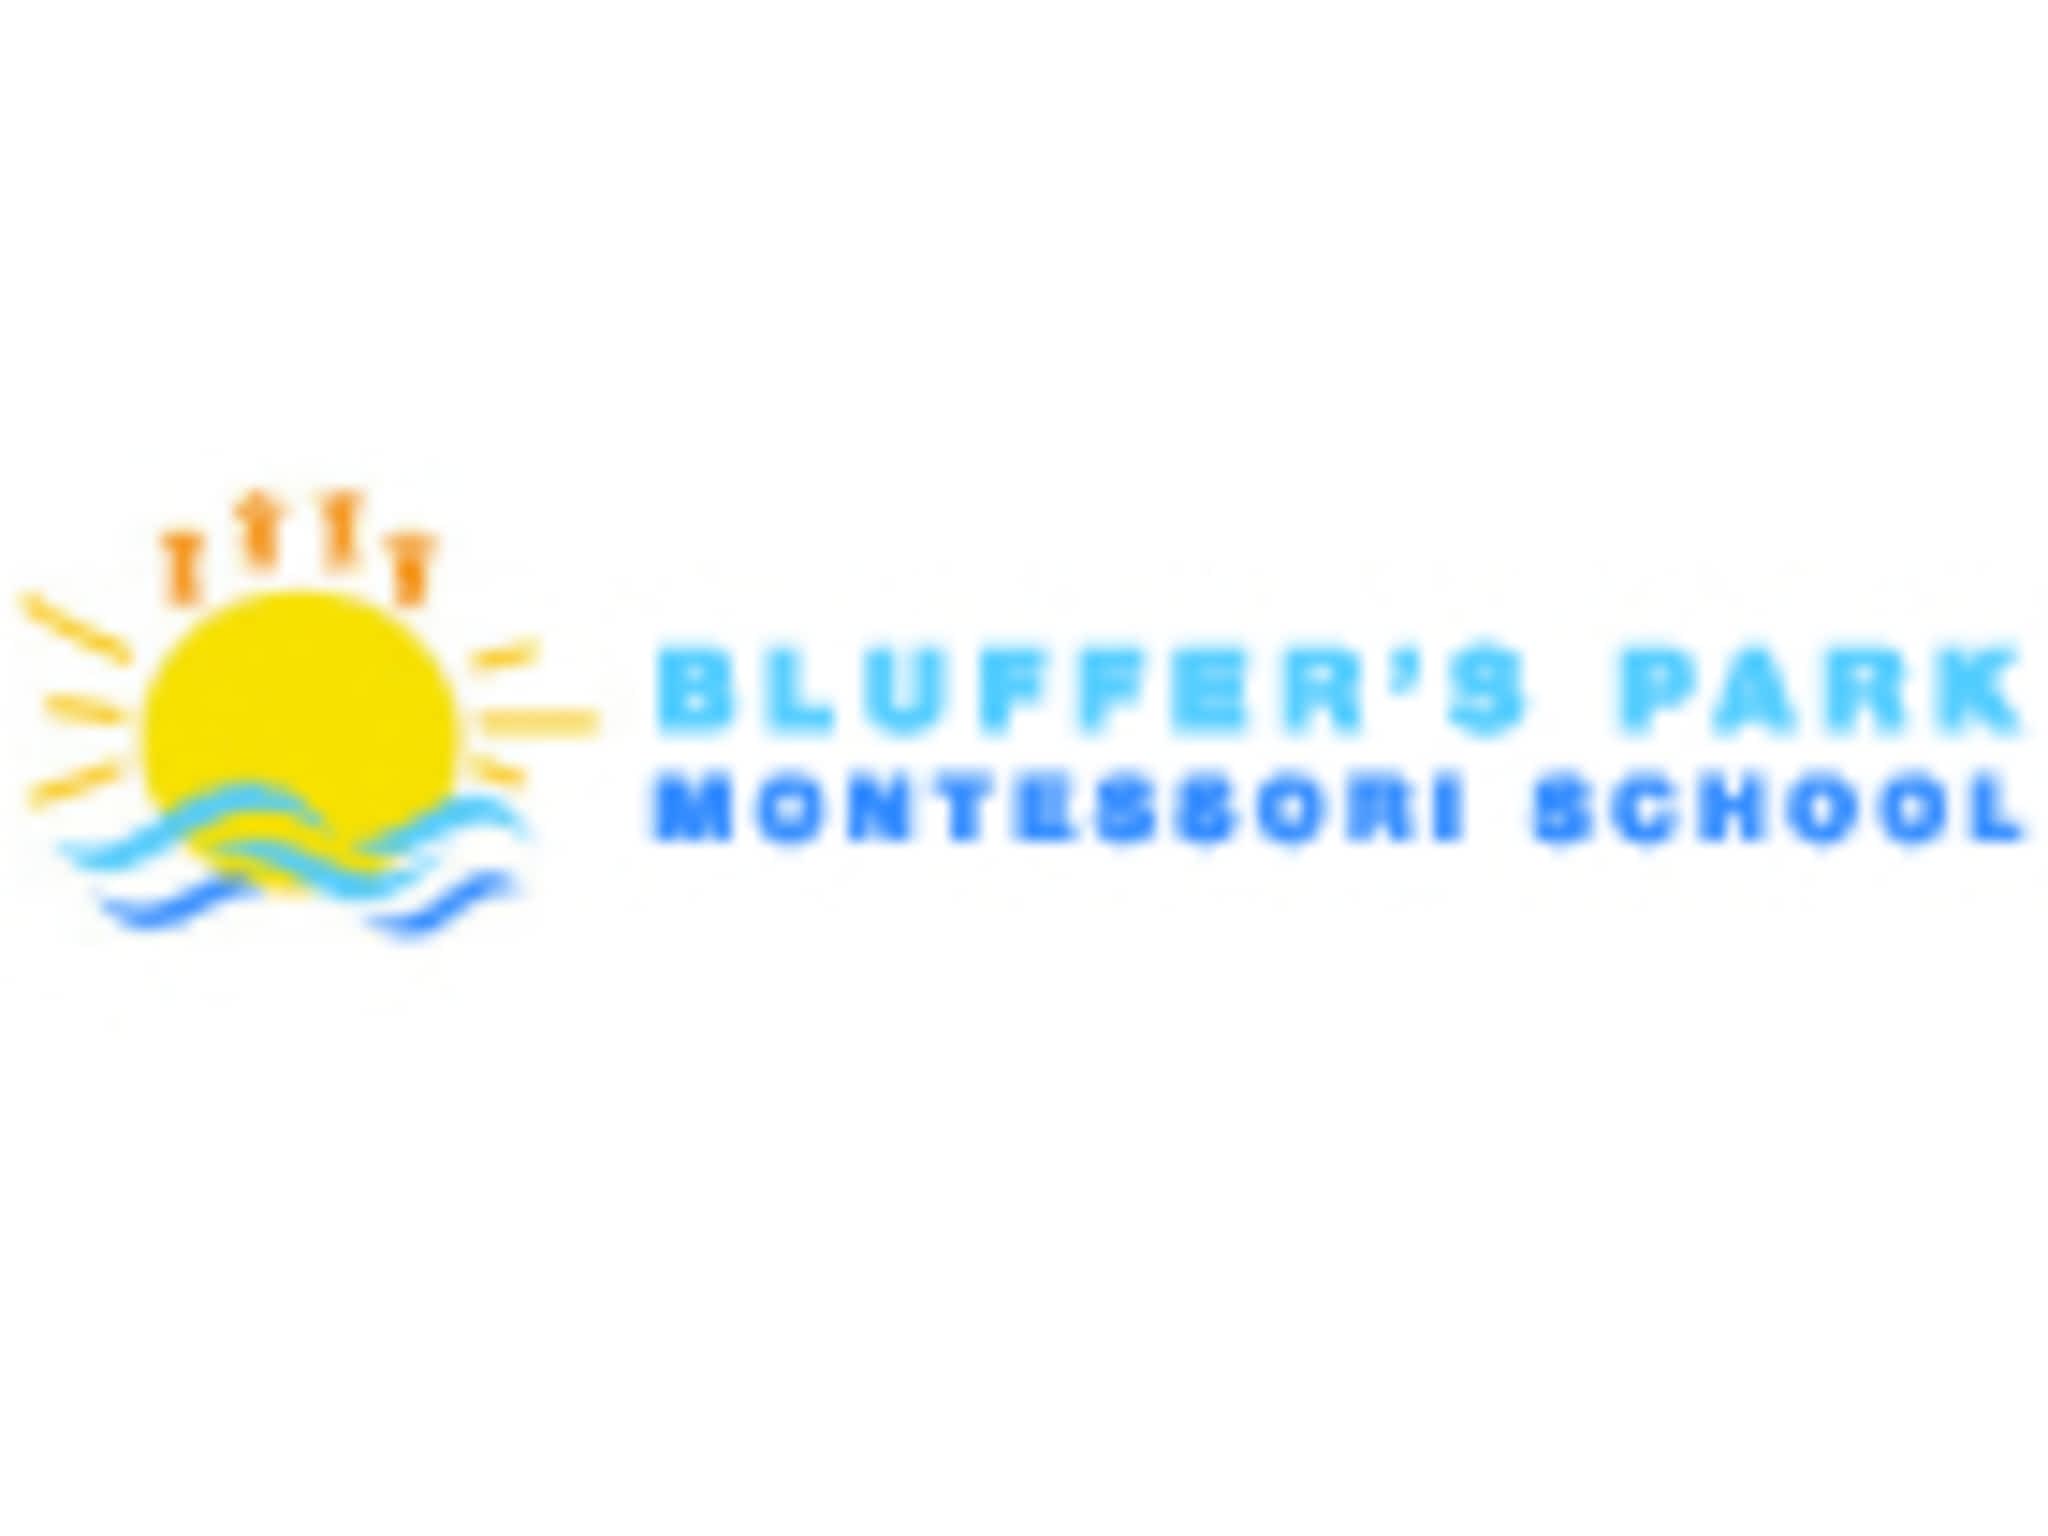 photo Bluffer's Park Montessori School